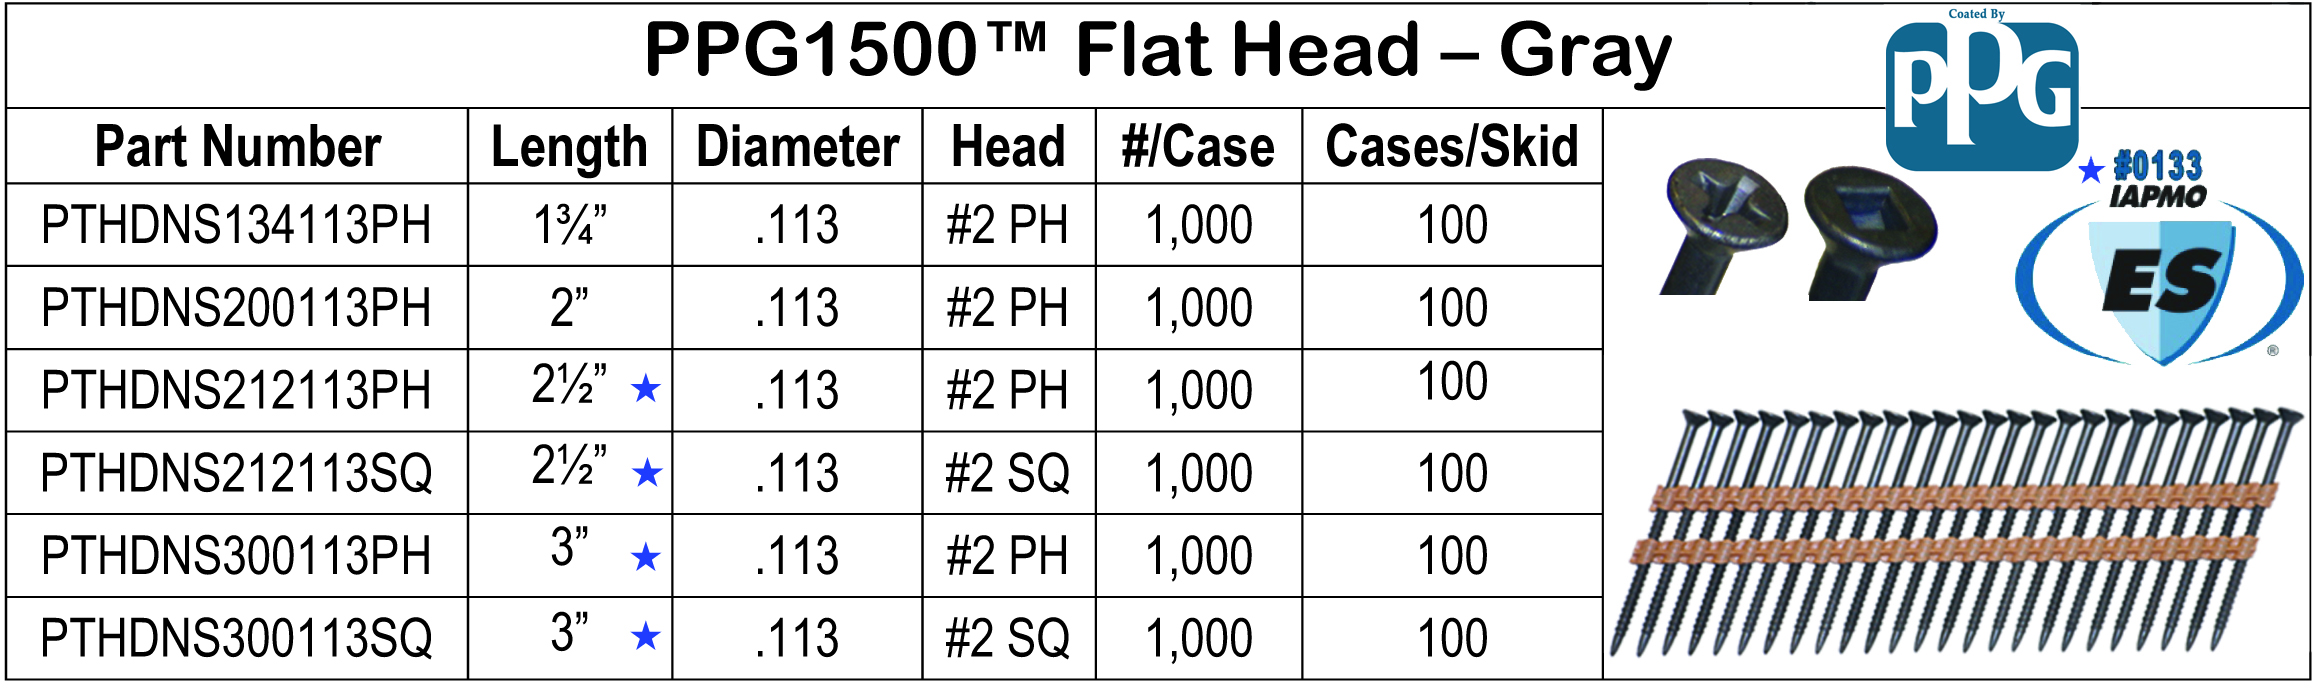 PPG1500 Flat Head